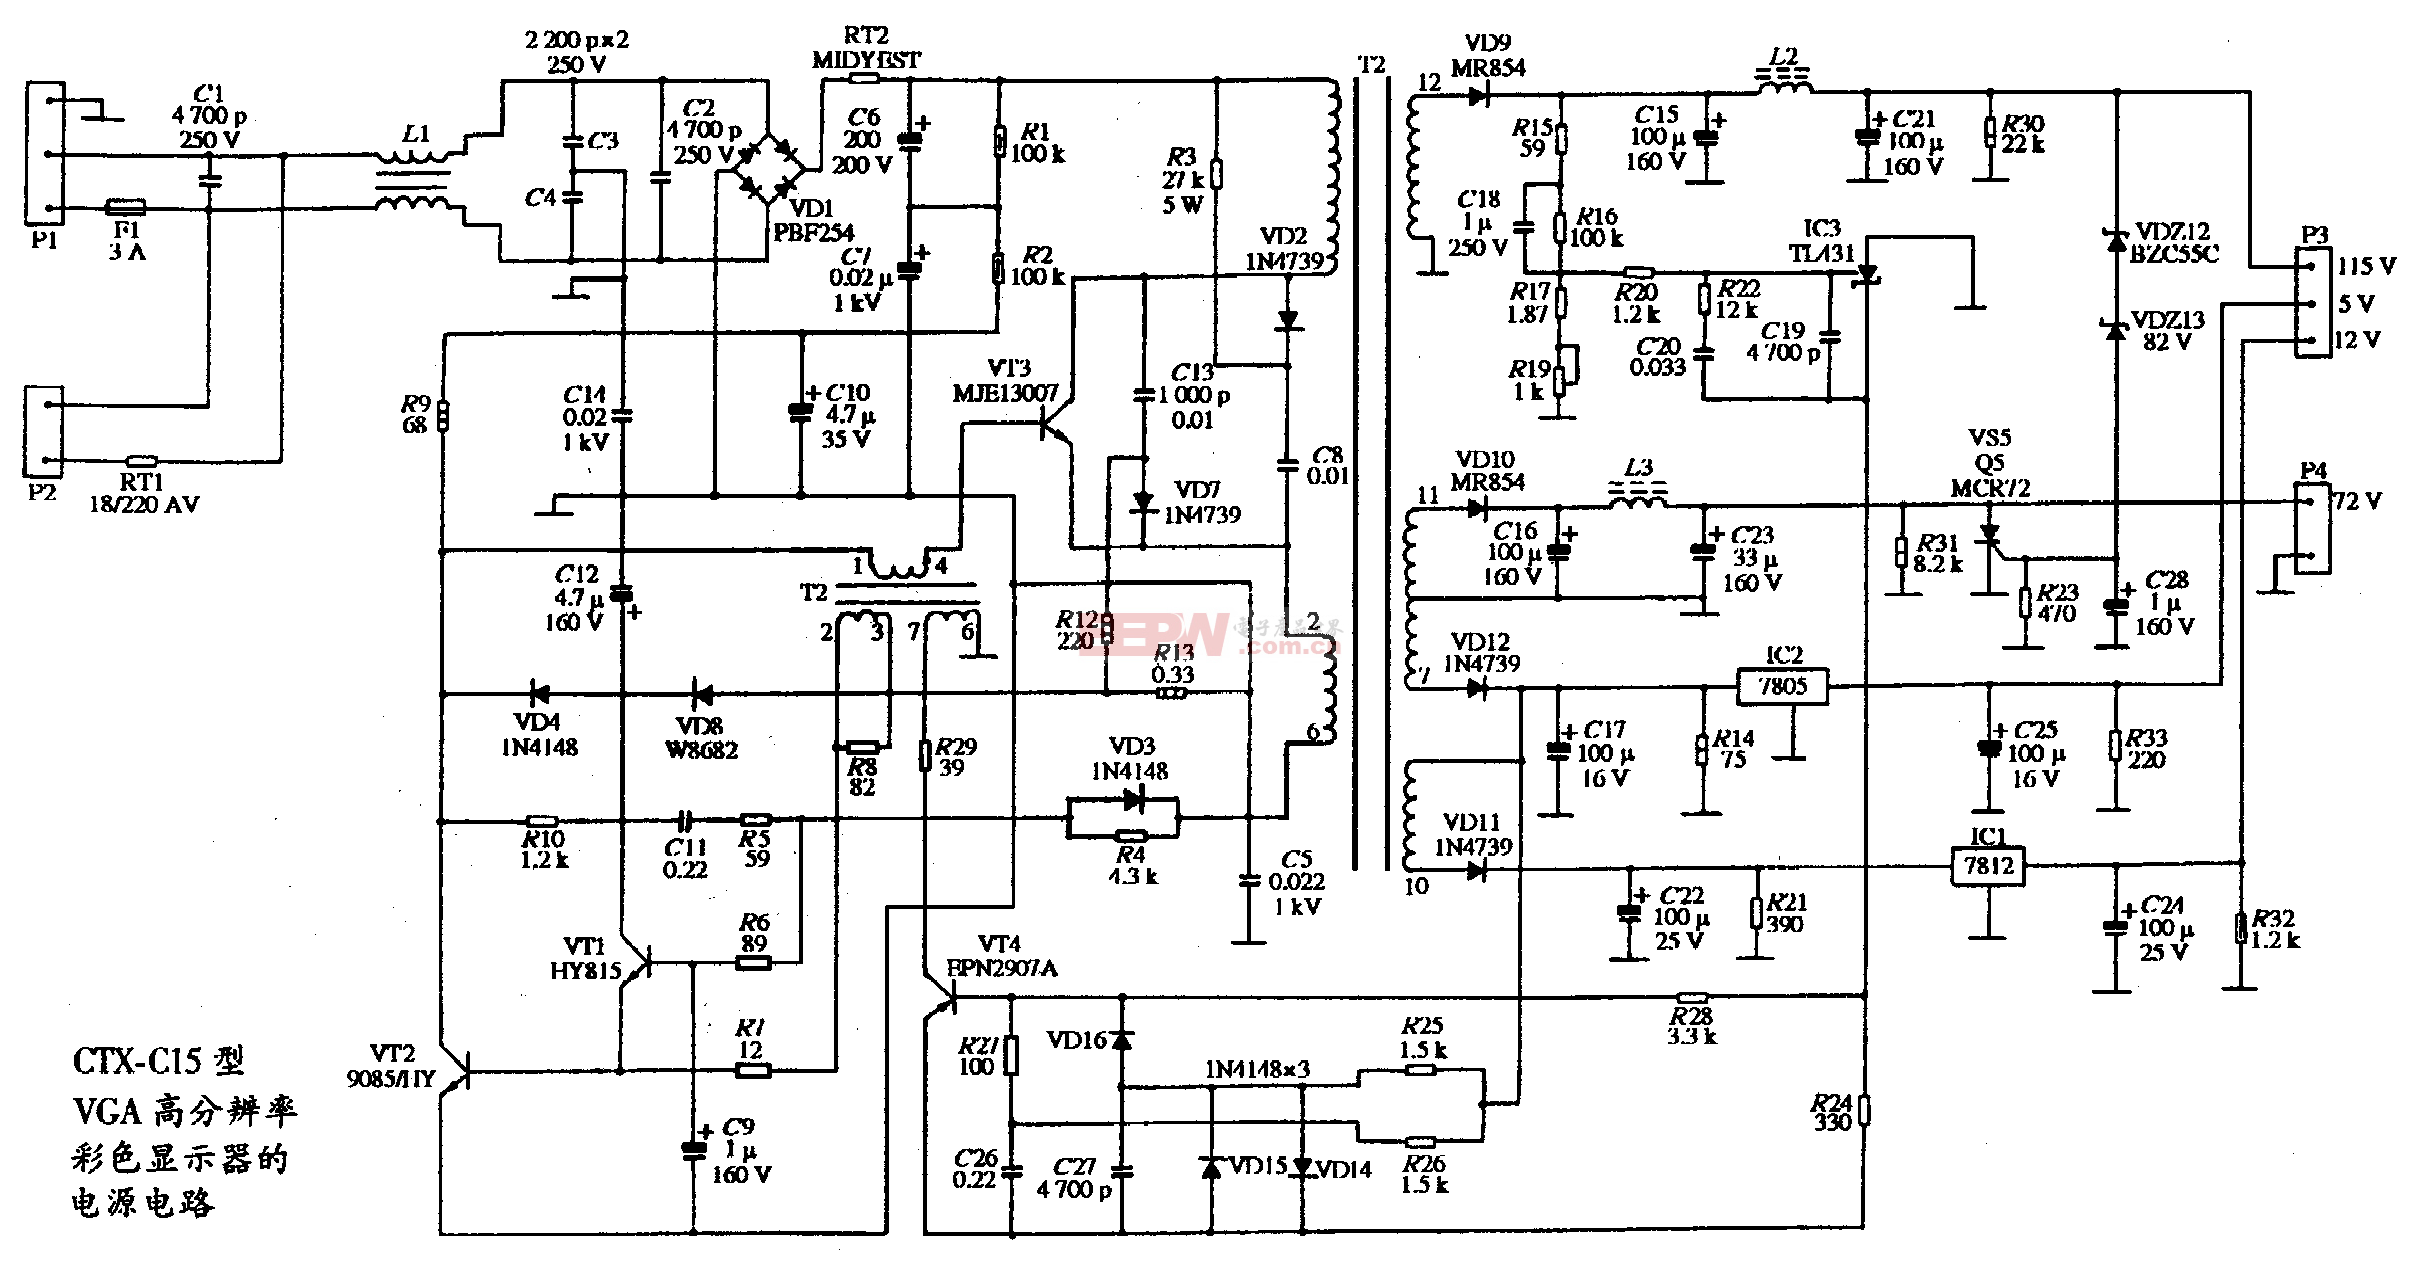 33、CTX-C15型VGA高分辨率彩色显示器的电源电路图